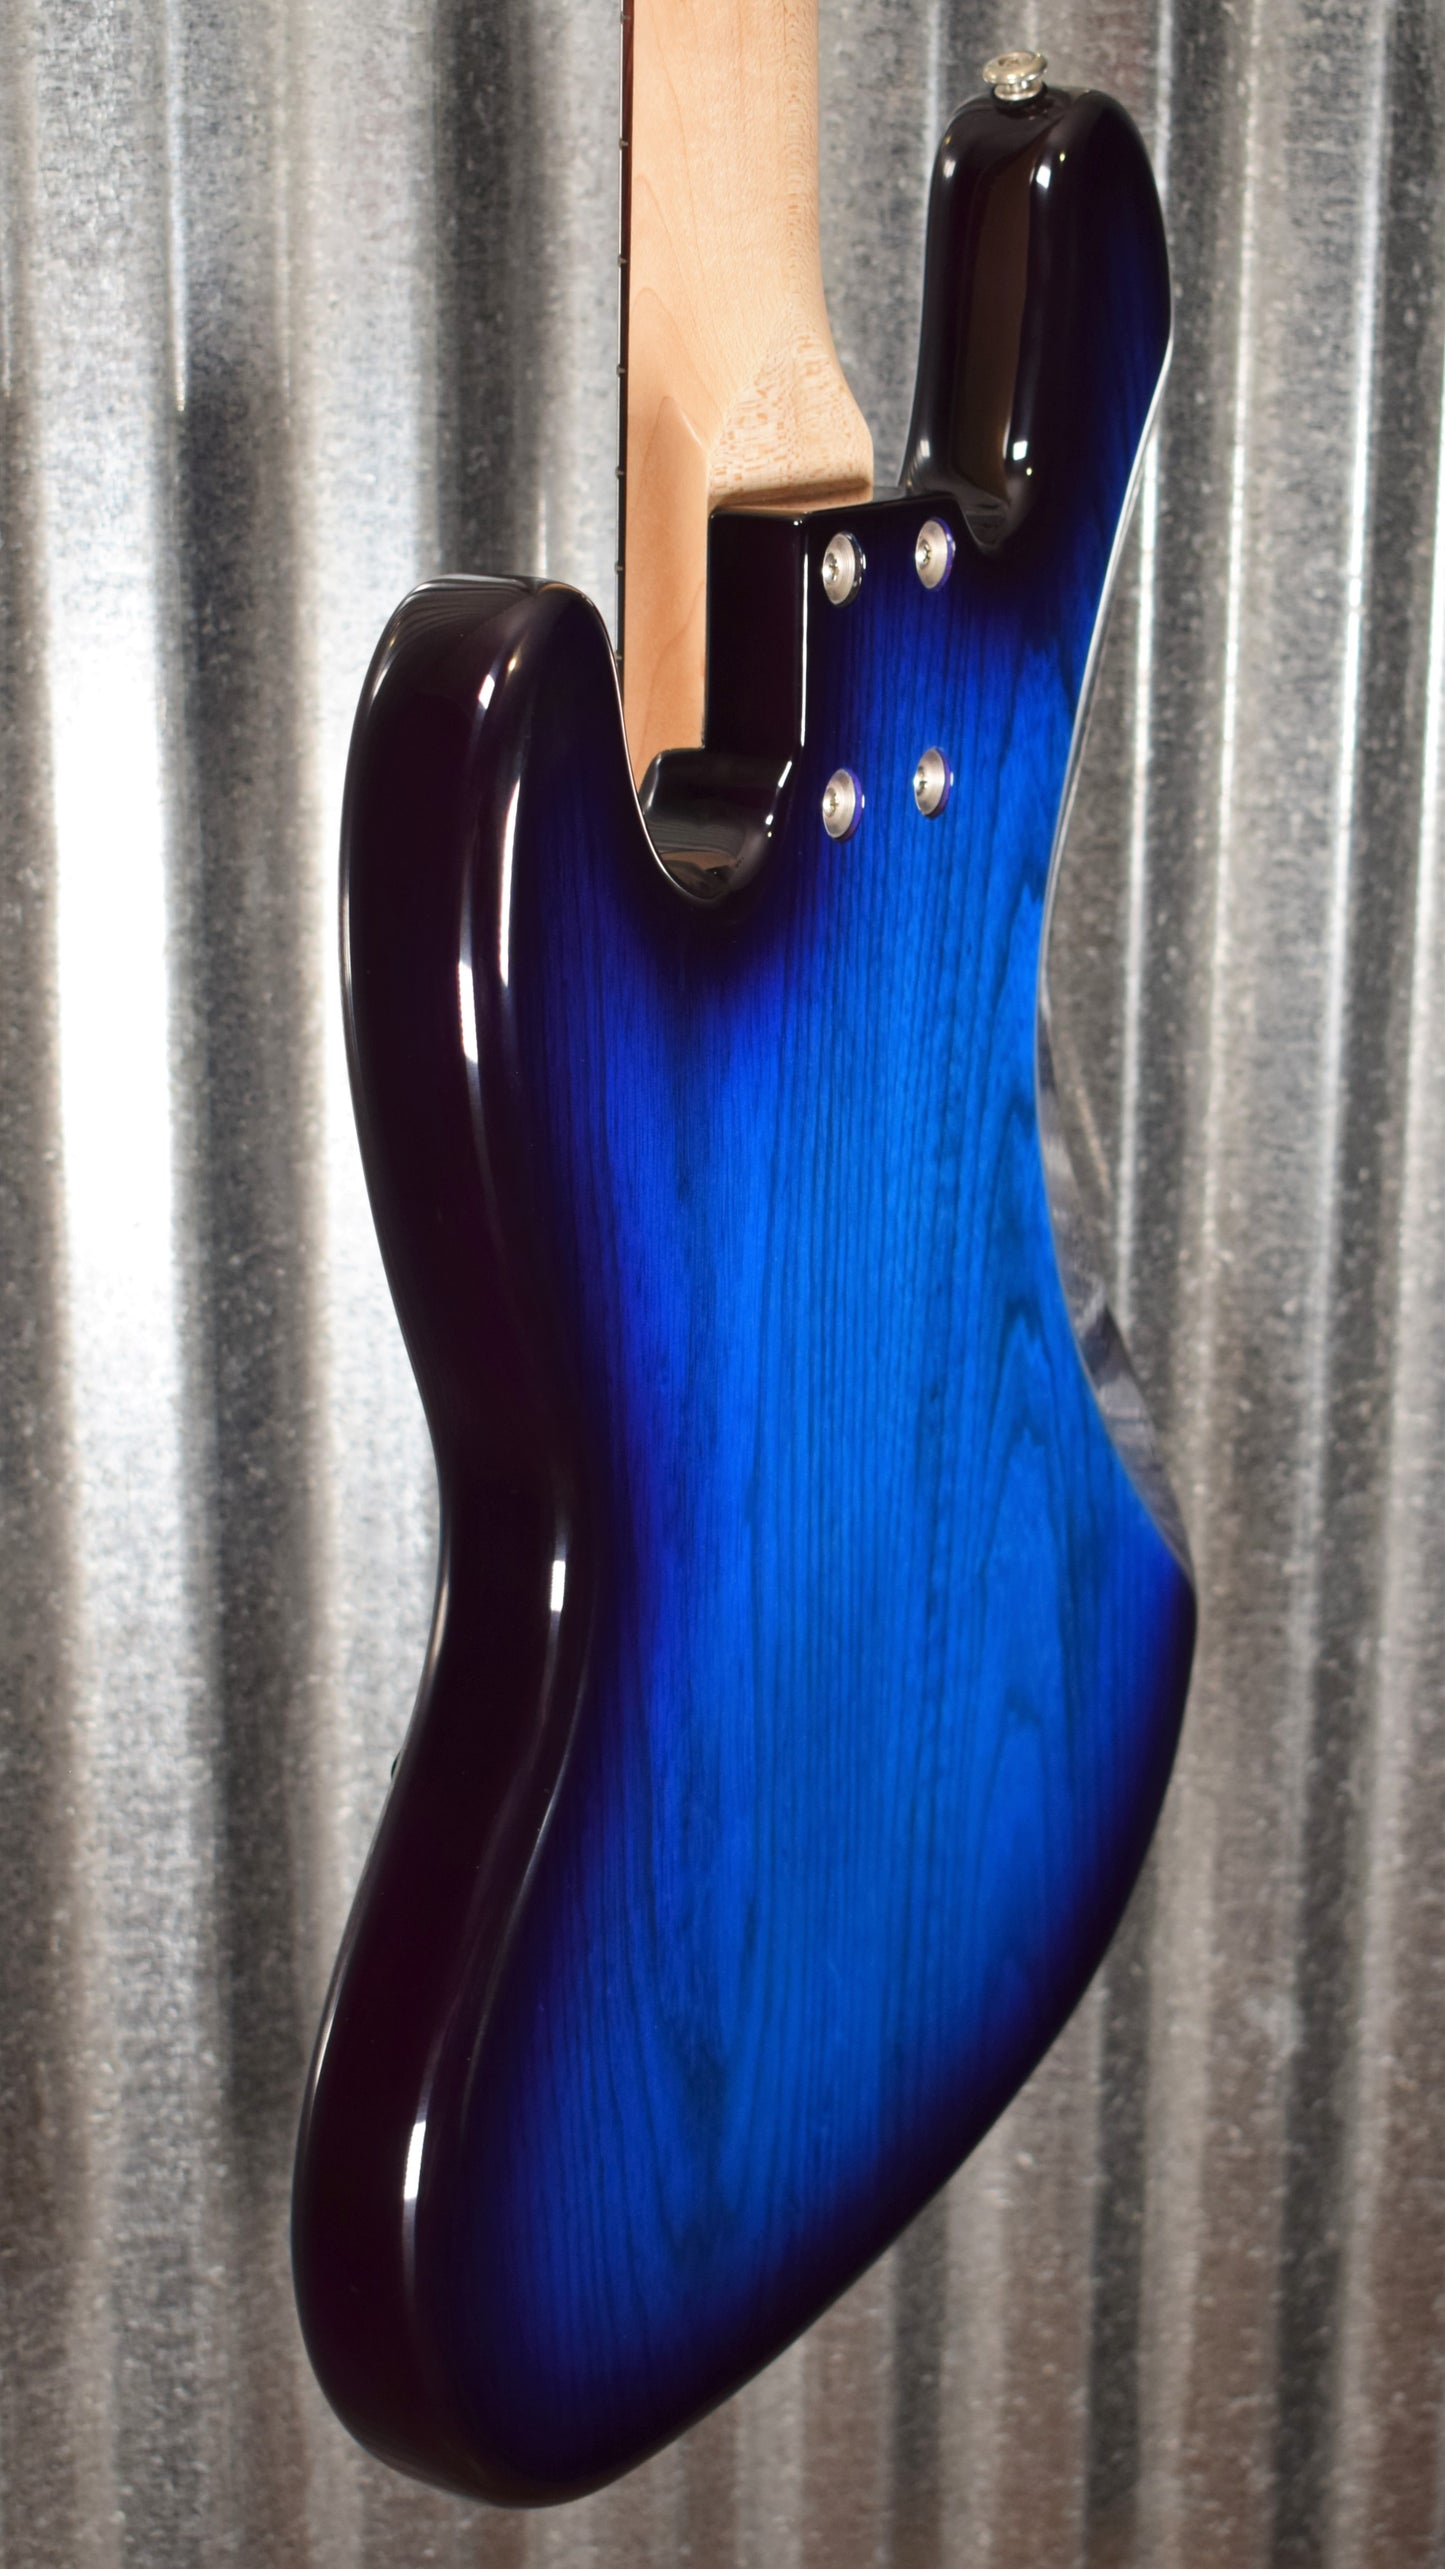 G&L USA JB-5 5 String Jazz Bass Blueburst & Case 2020 JB5 #0175